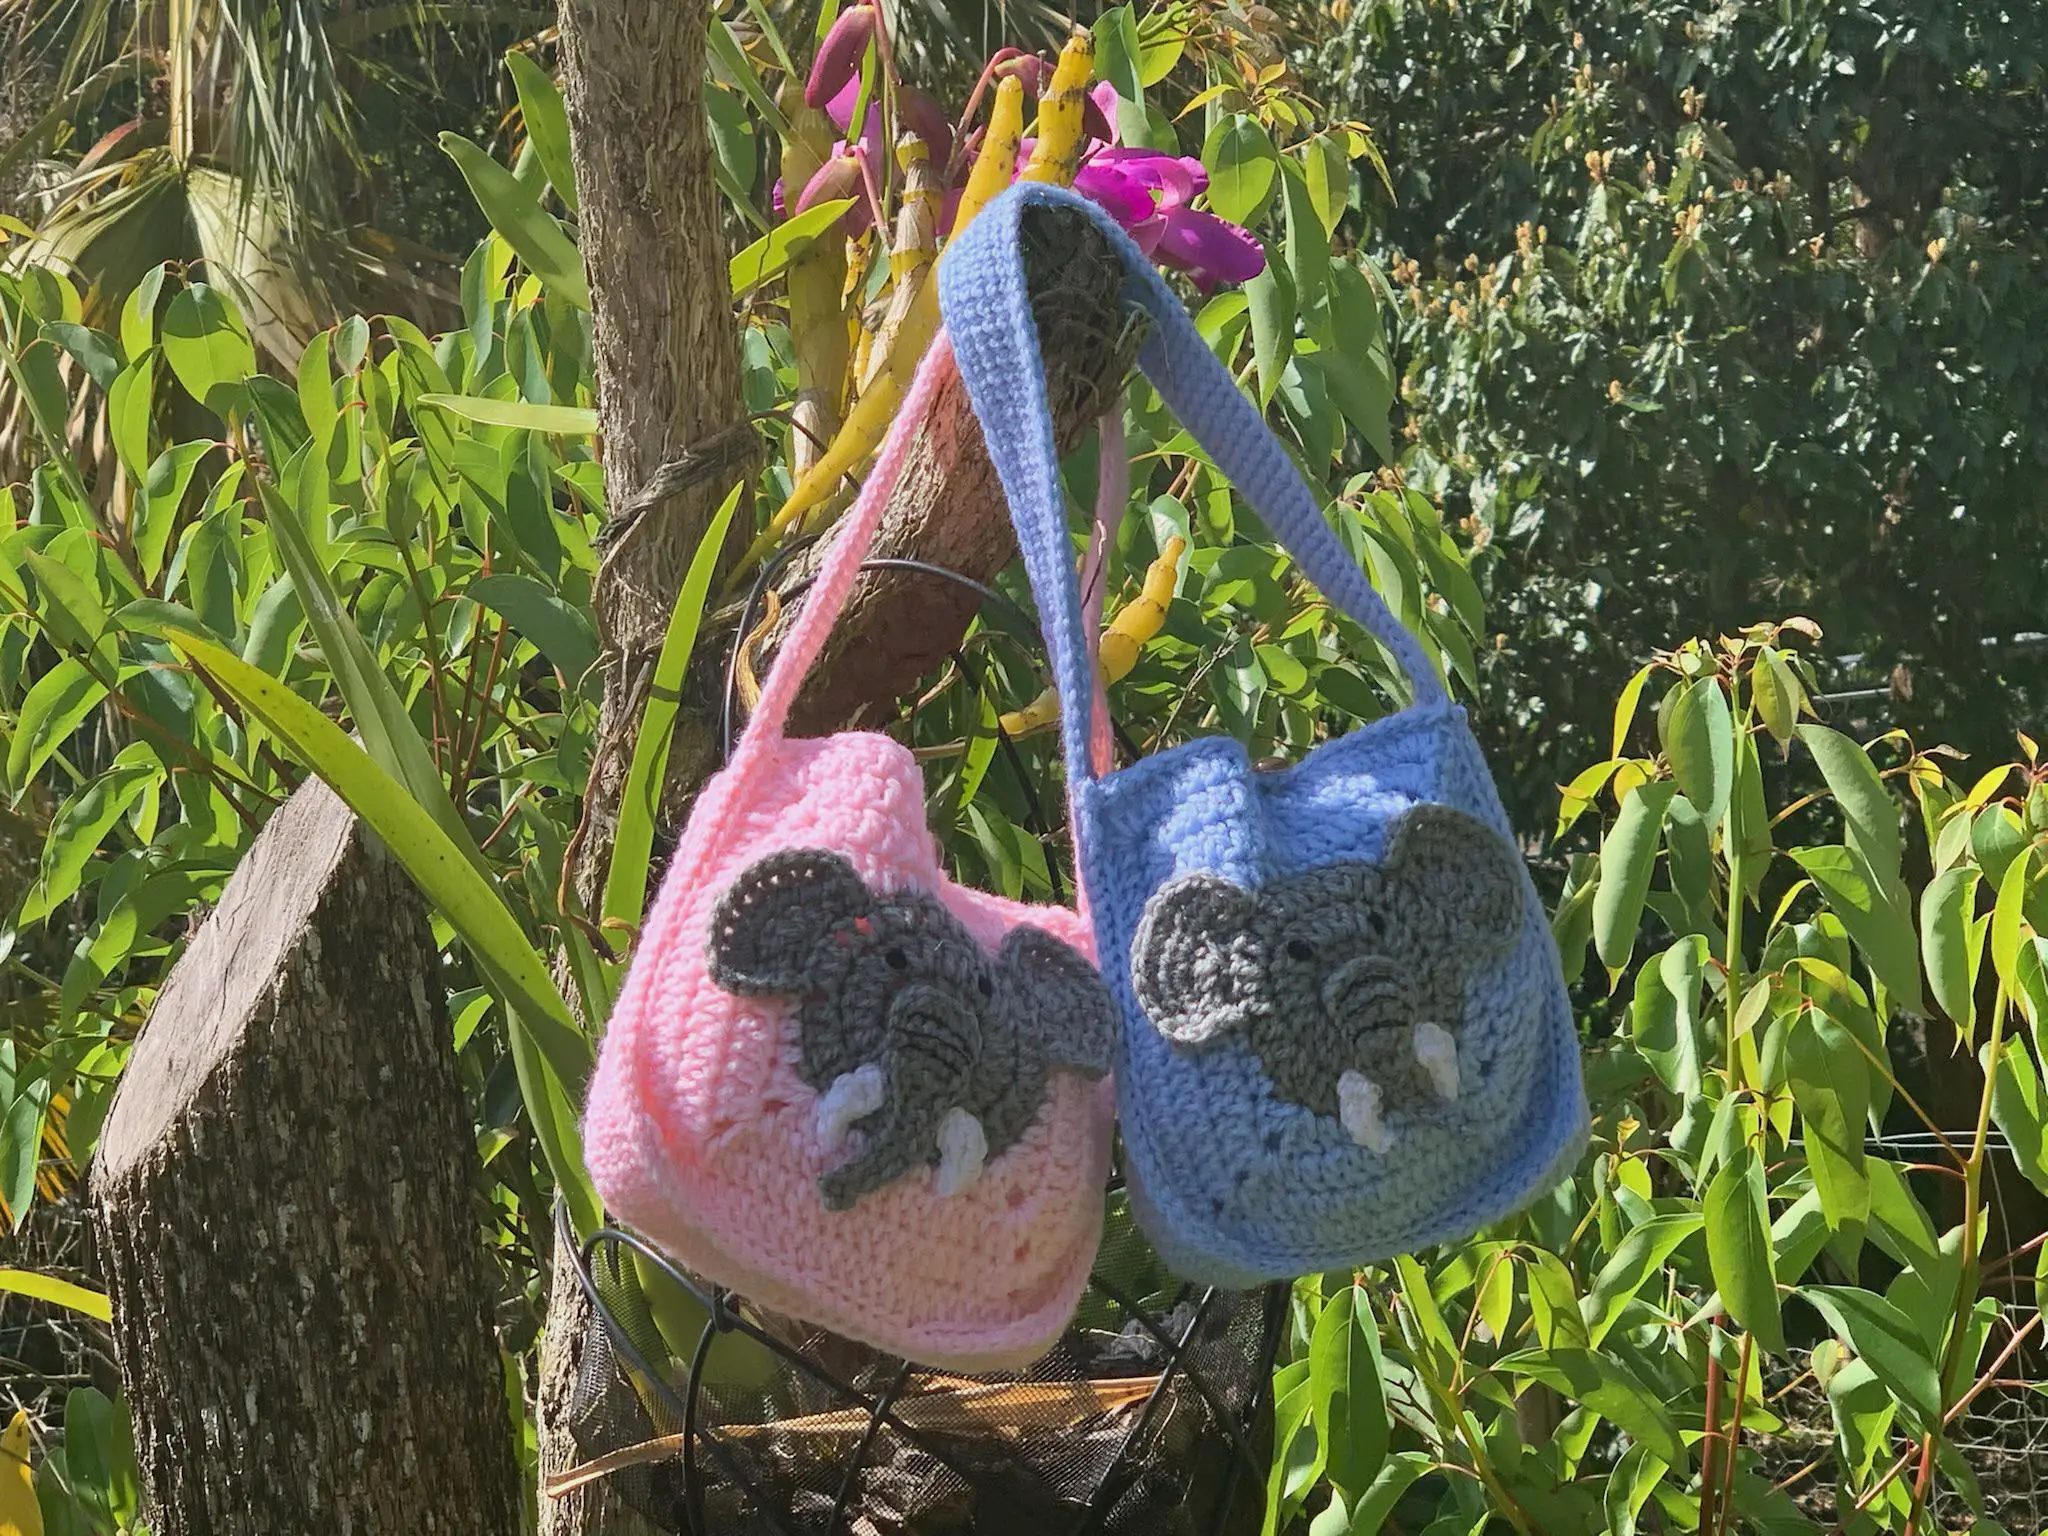 Finished crochet elephant bag outside landscape